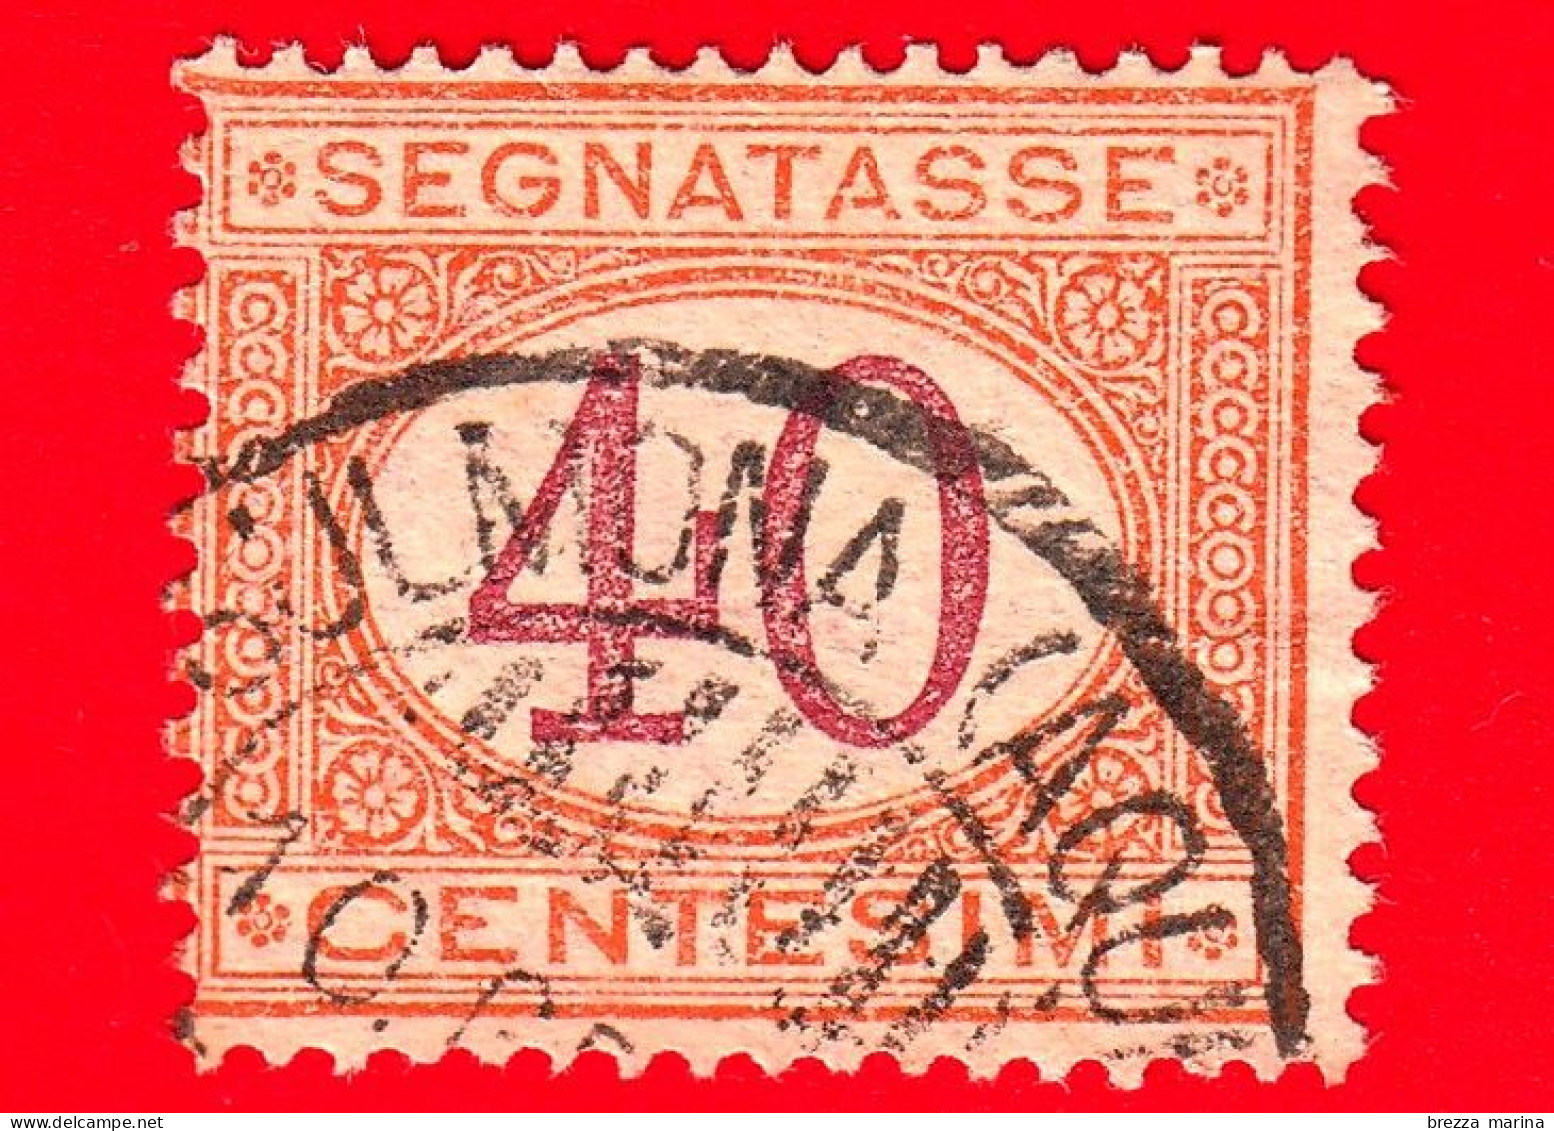 ITALIA - Usato -  1870 - 1890 - Segnatasse - Cifra Entro Un Ovale - 40 C. - Taxe